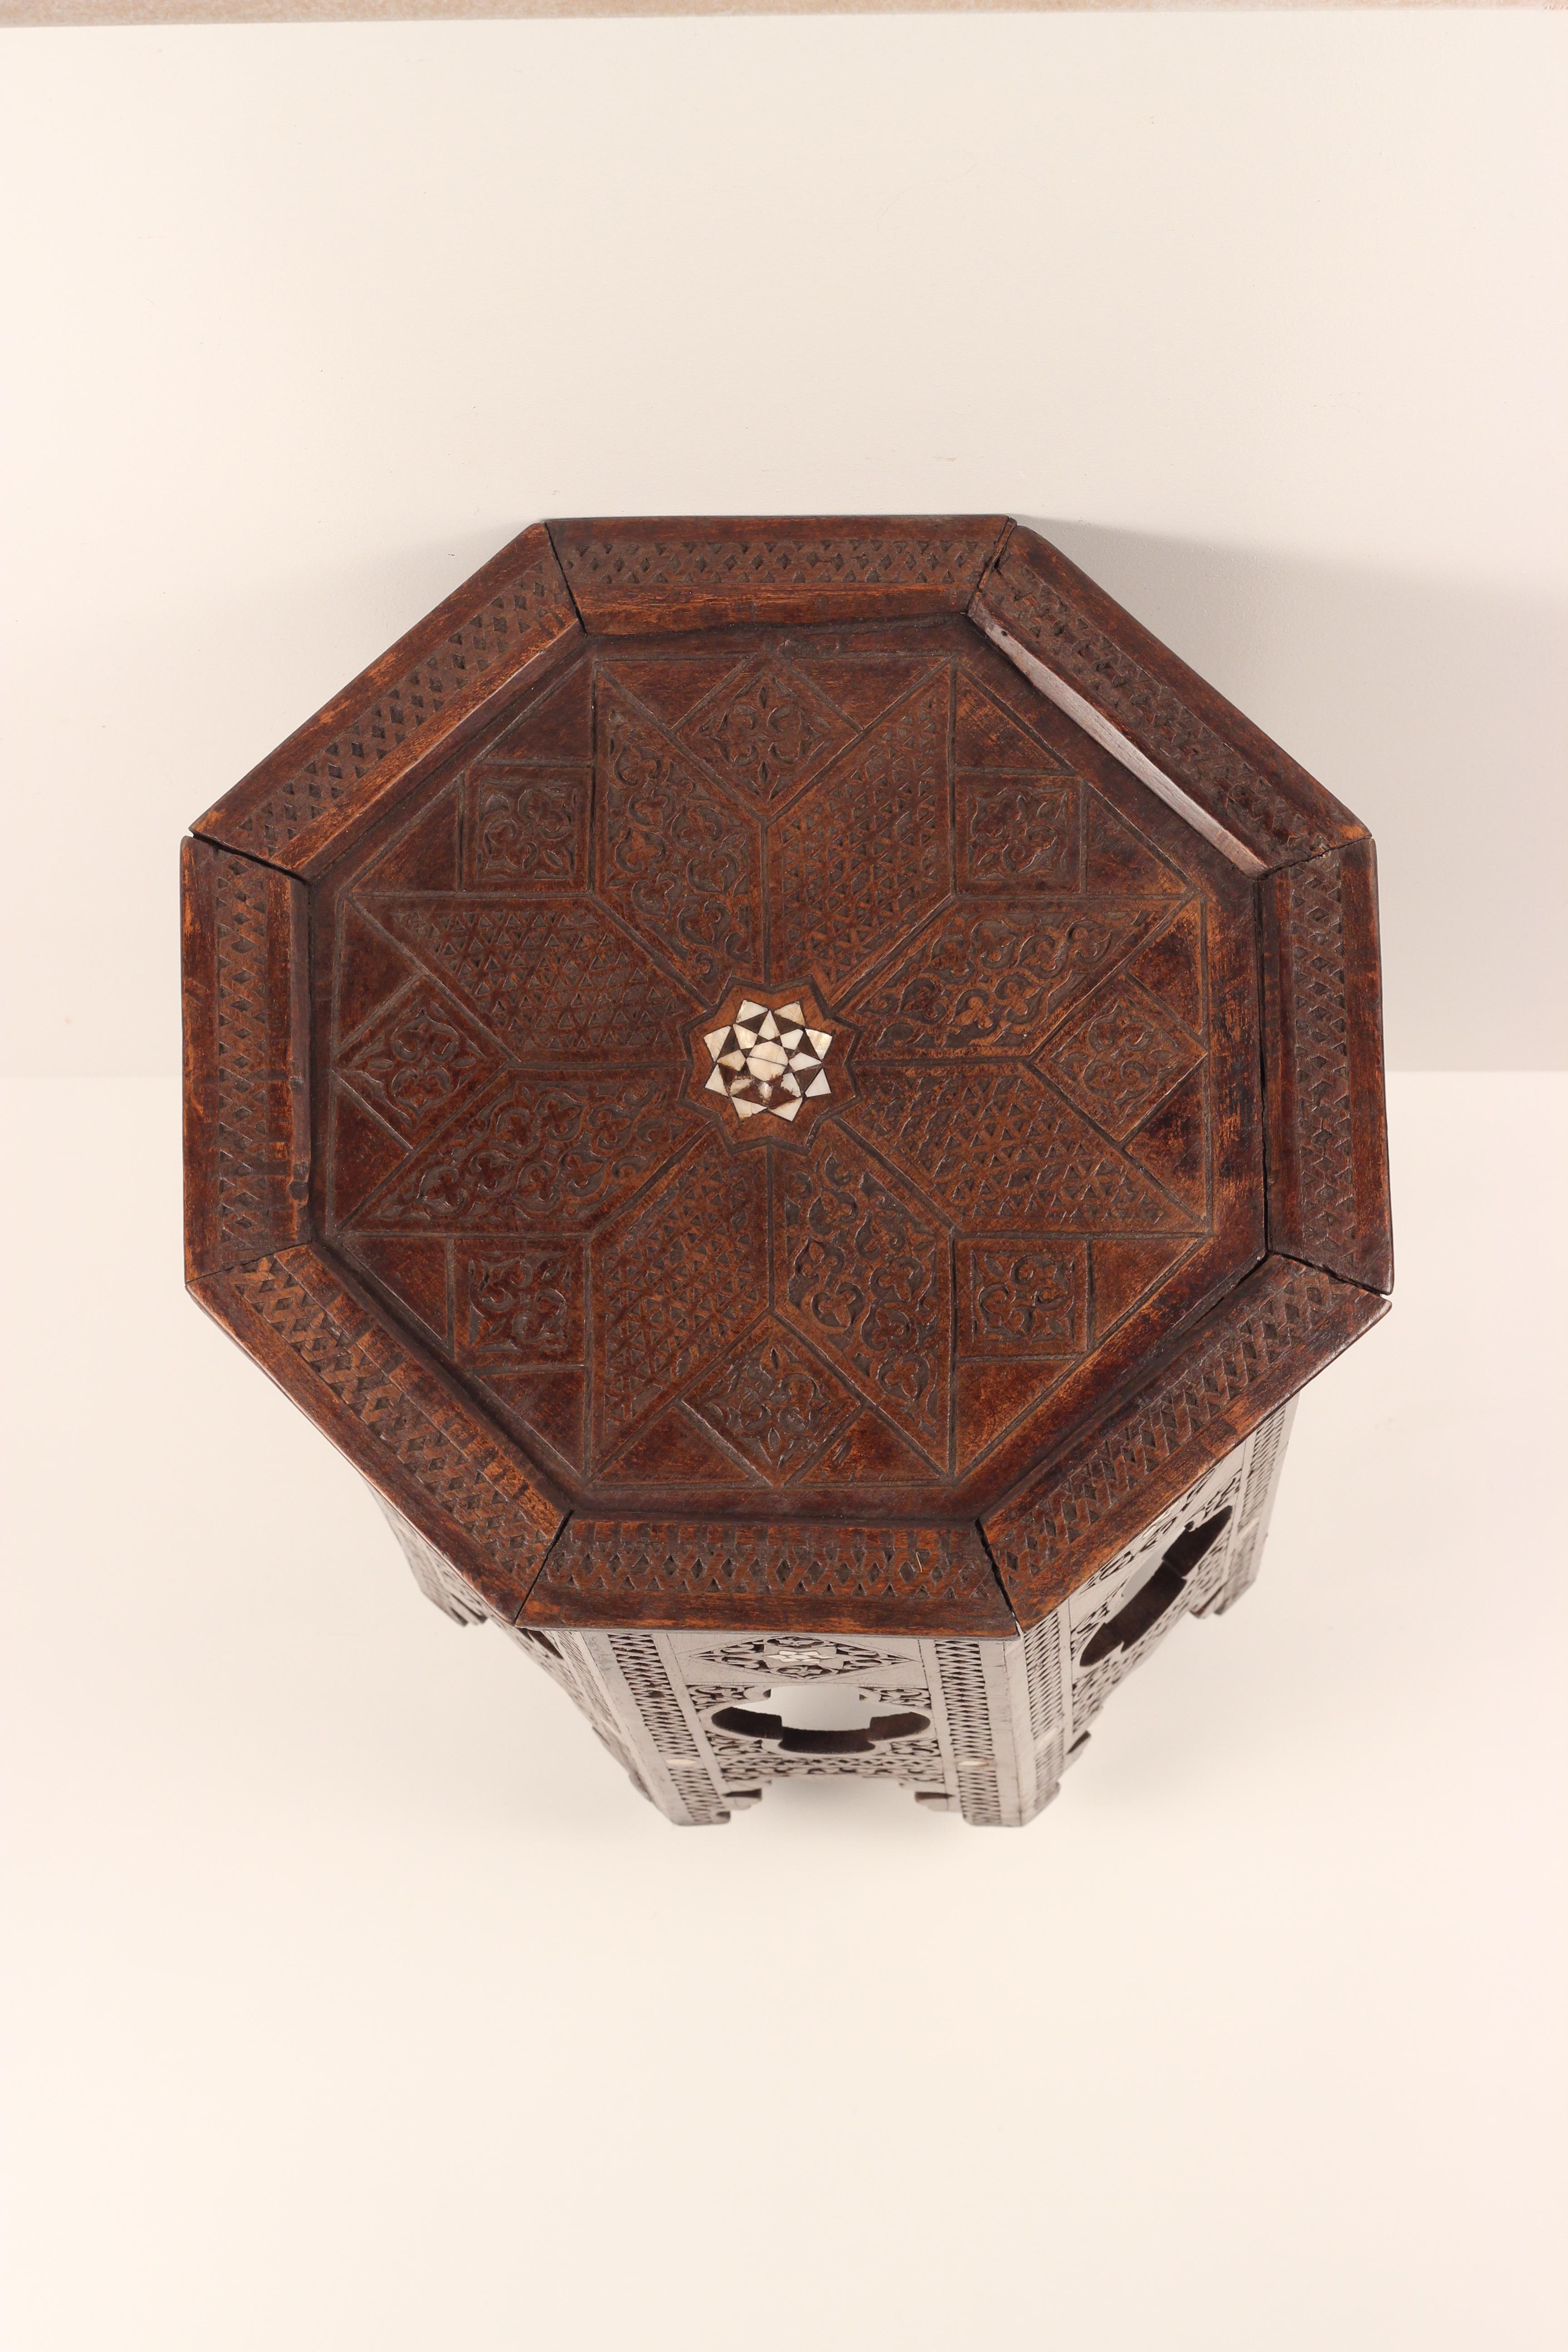 Bohemian Boho Chic Style 19th Century Carved Wood and Bone Octagonal Moorish Table